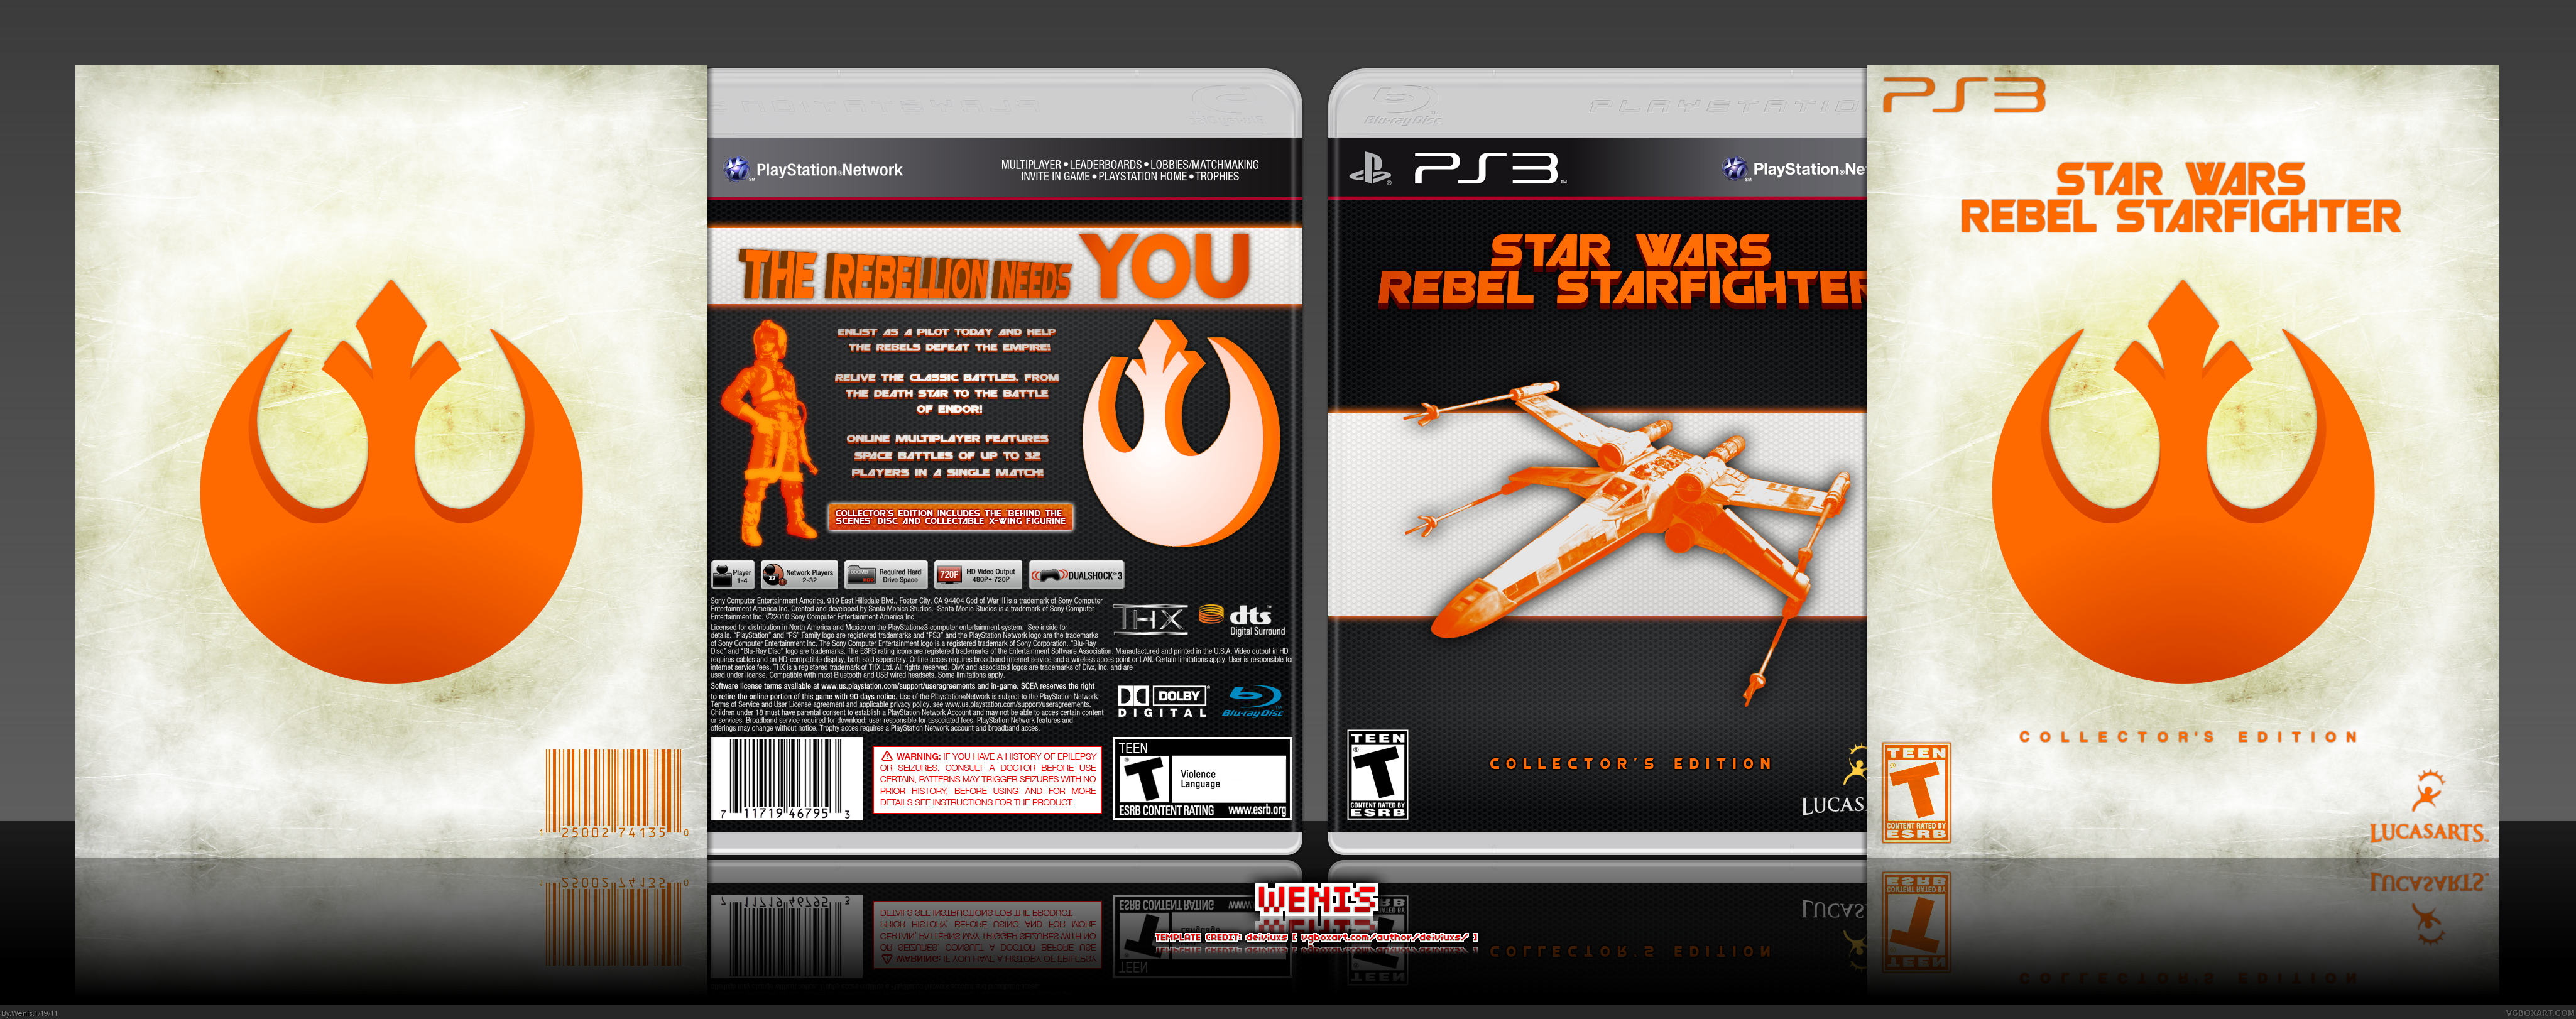 Star Wars Rebel Starfighter box cover